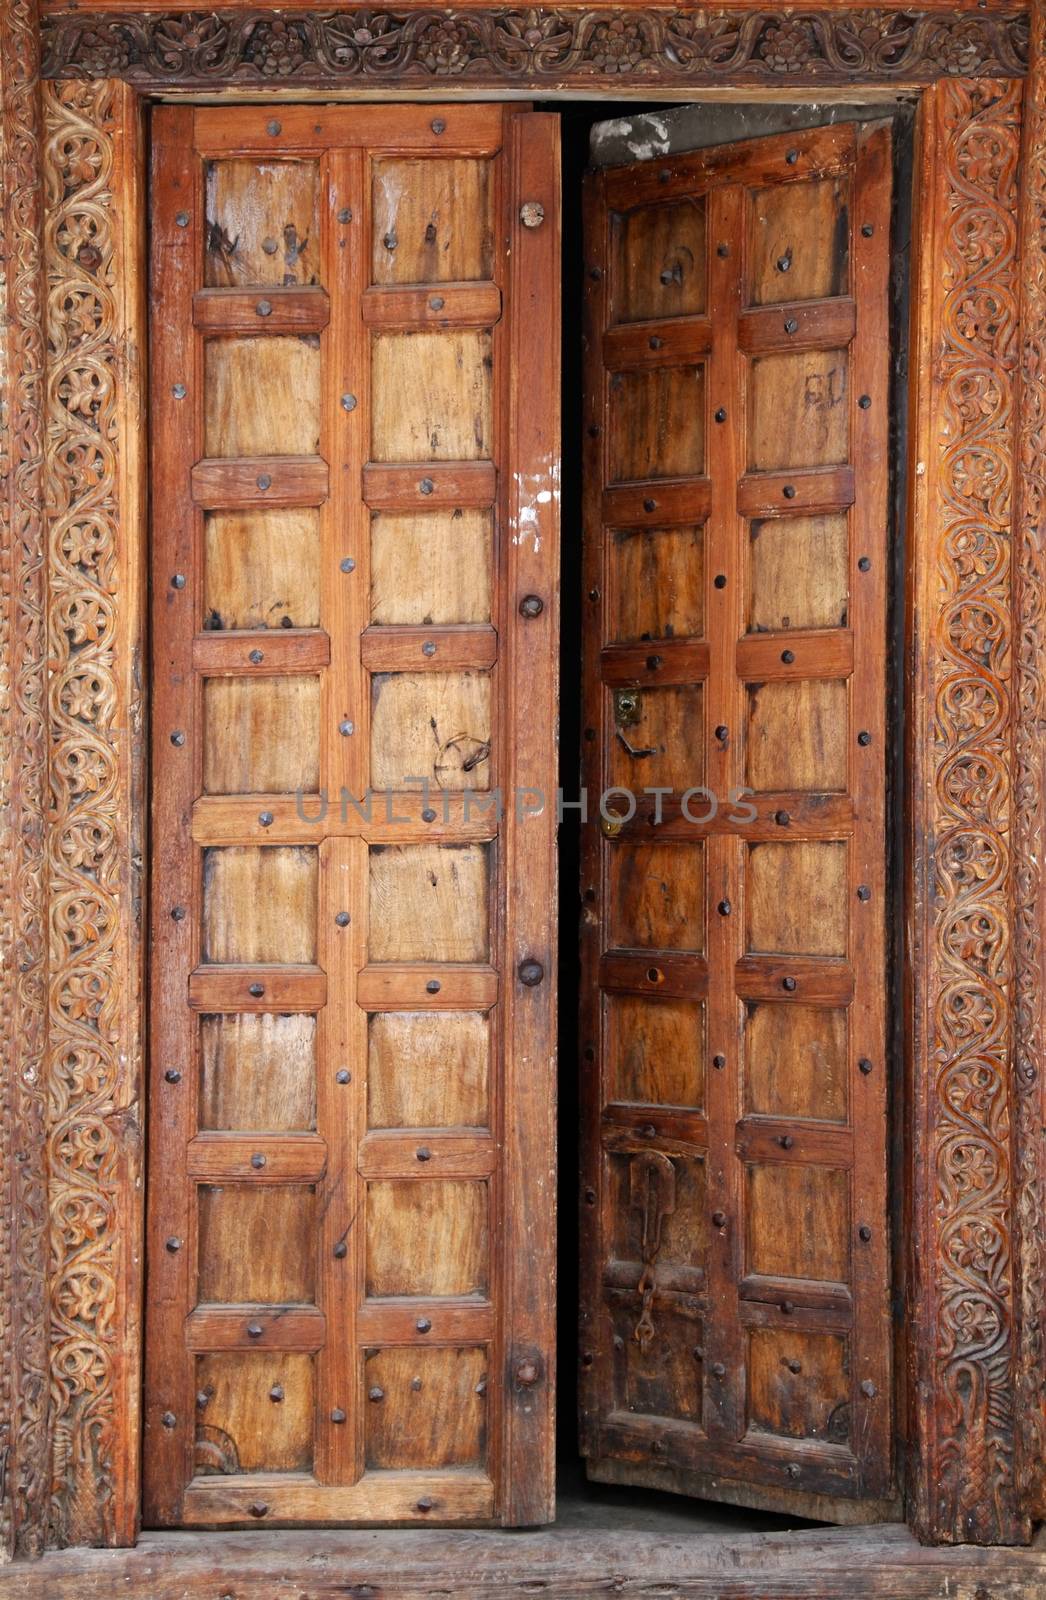 Old wooden door at Stone Town the capital of Zanzibar island East Africa. Zanzibar